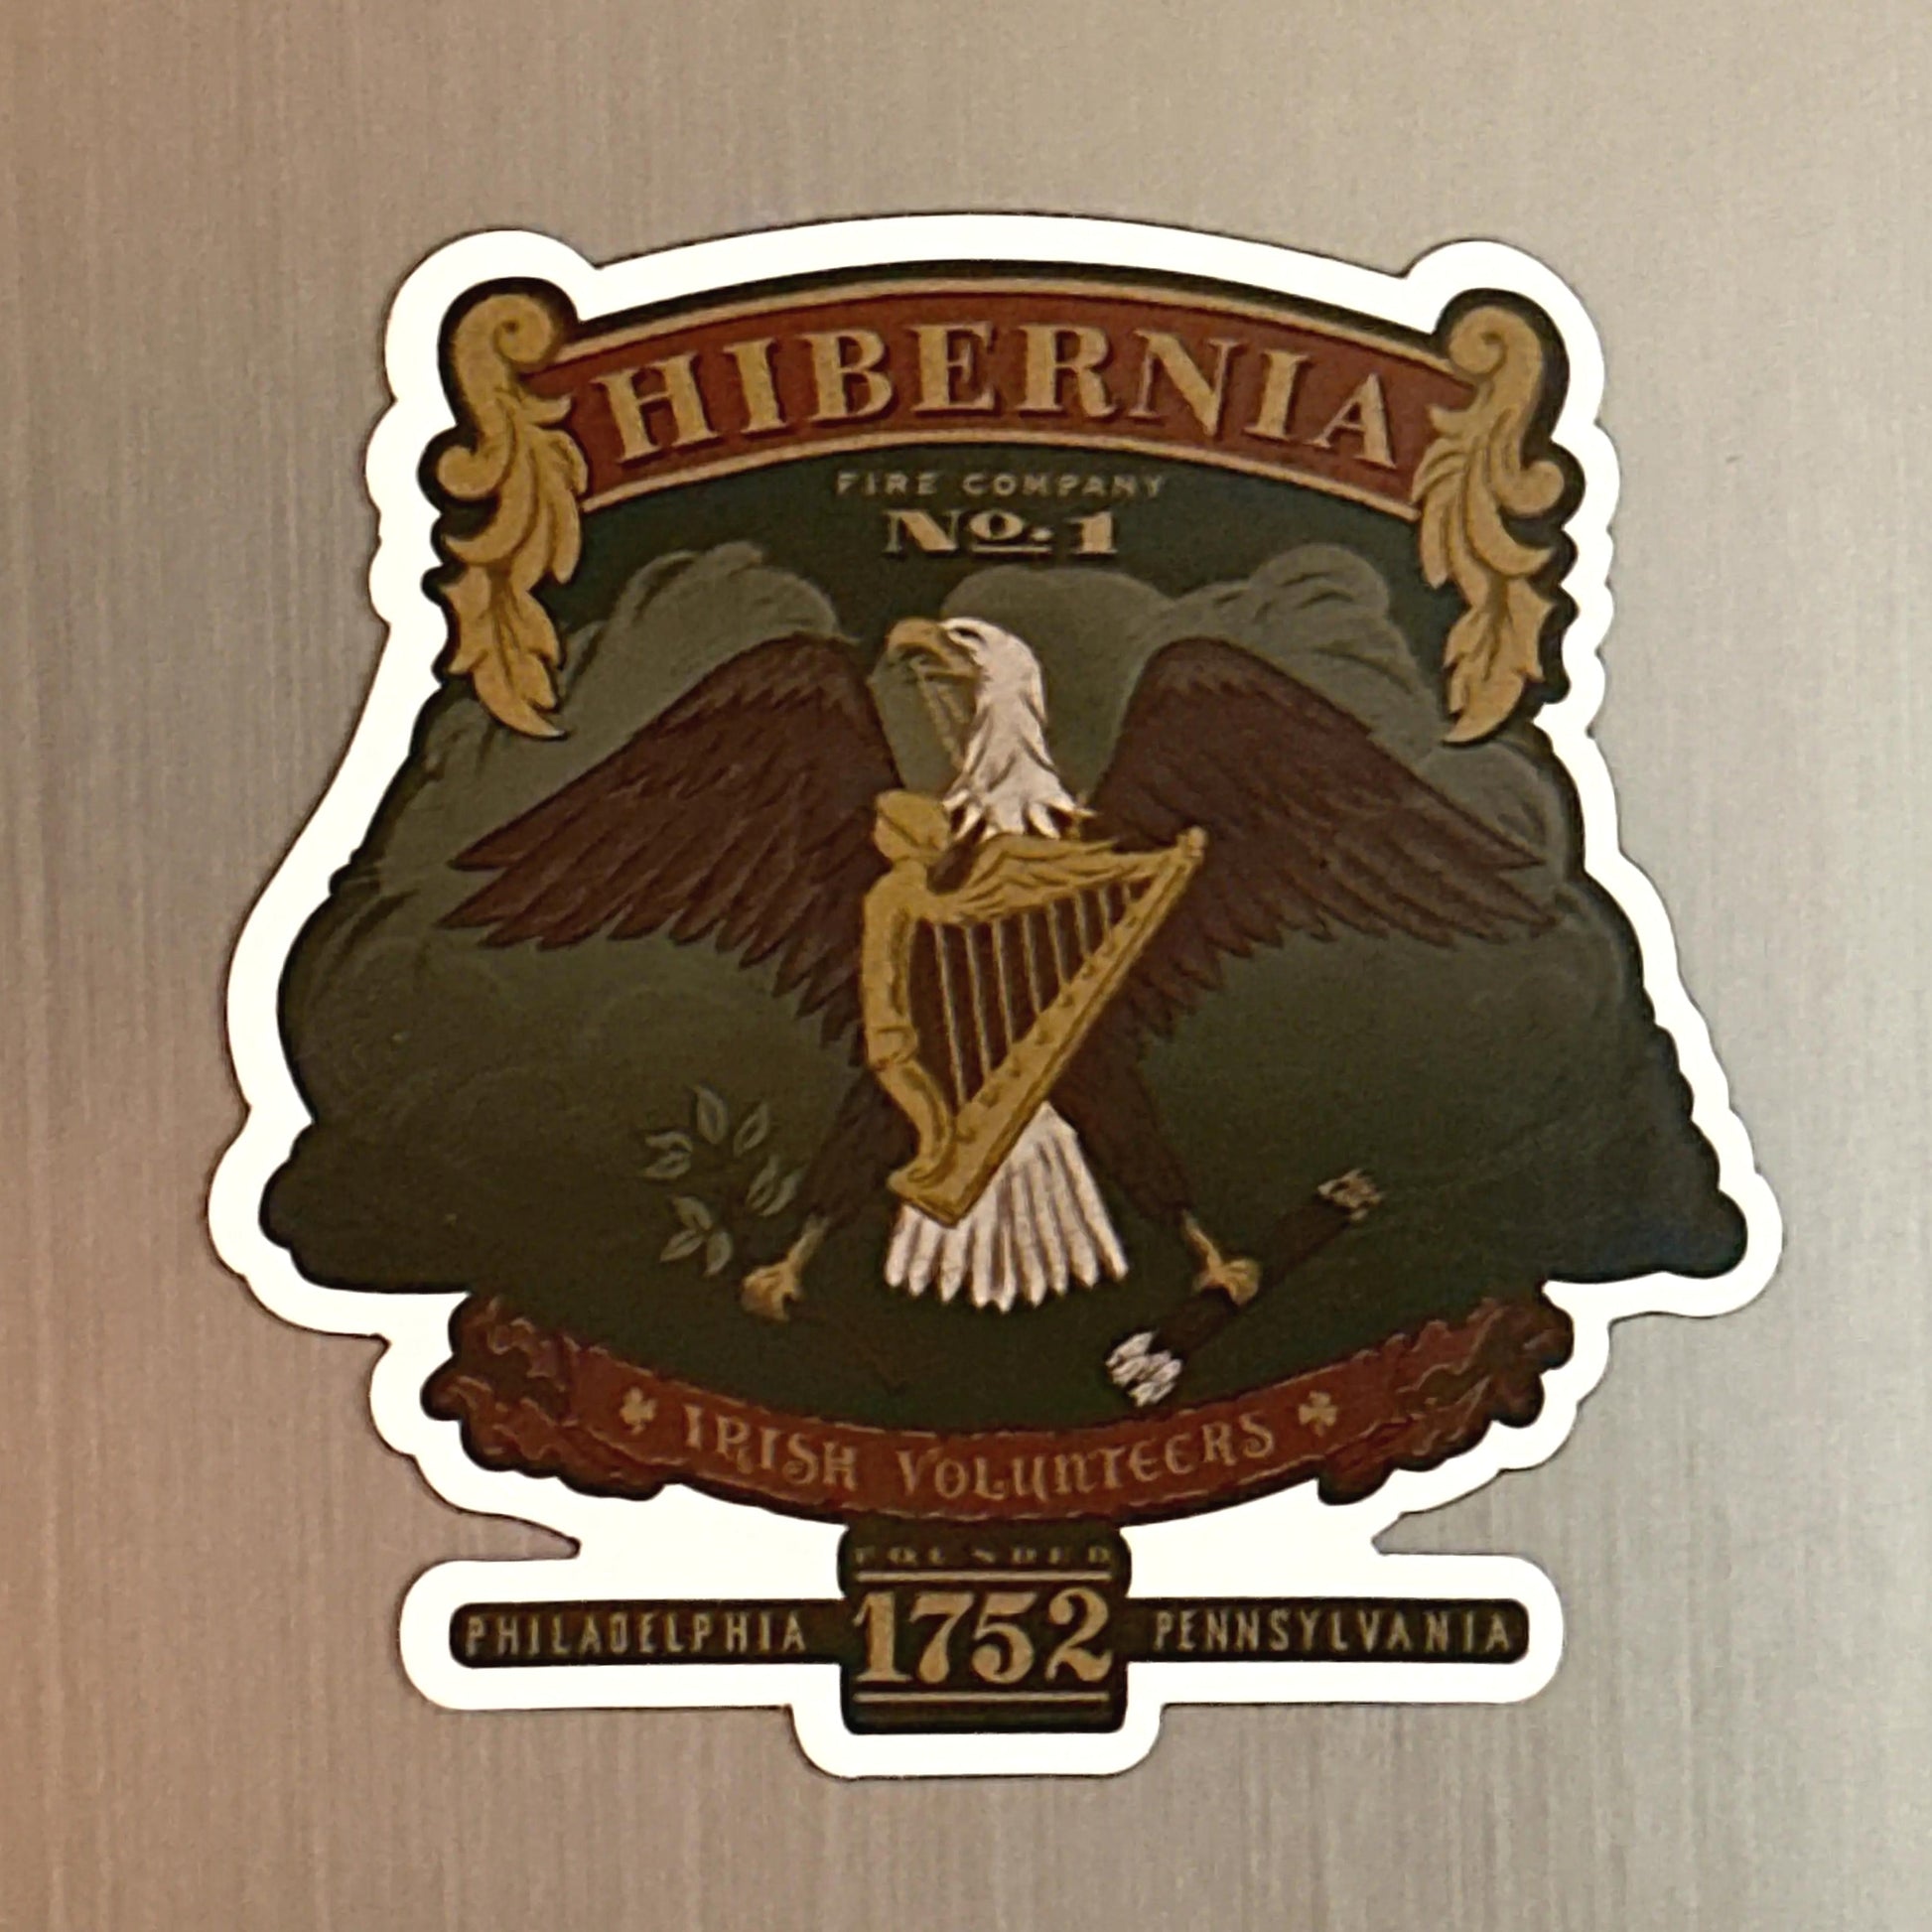 Irish Volunteers - Hibernia Fire Company Magnet from The History List store